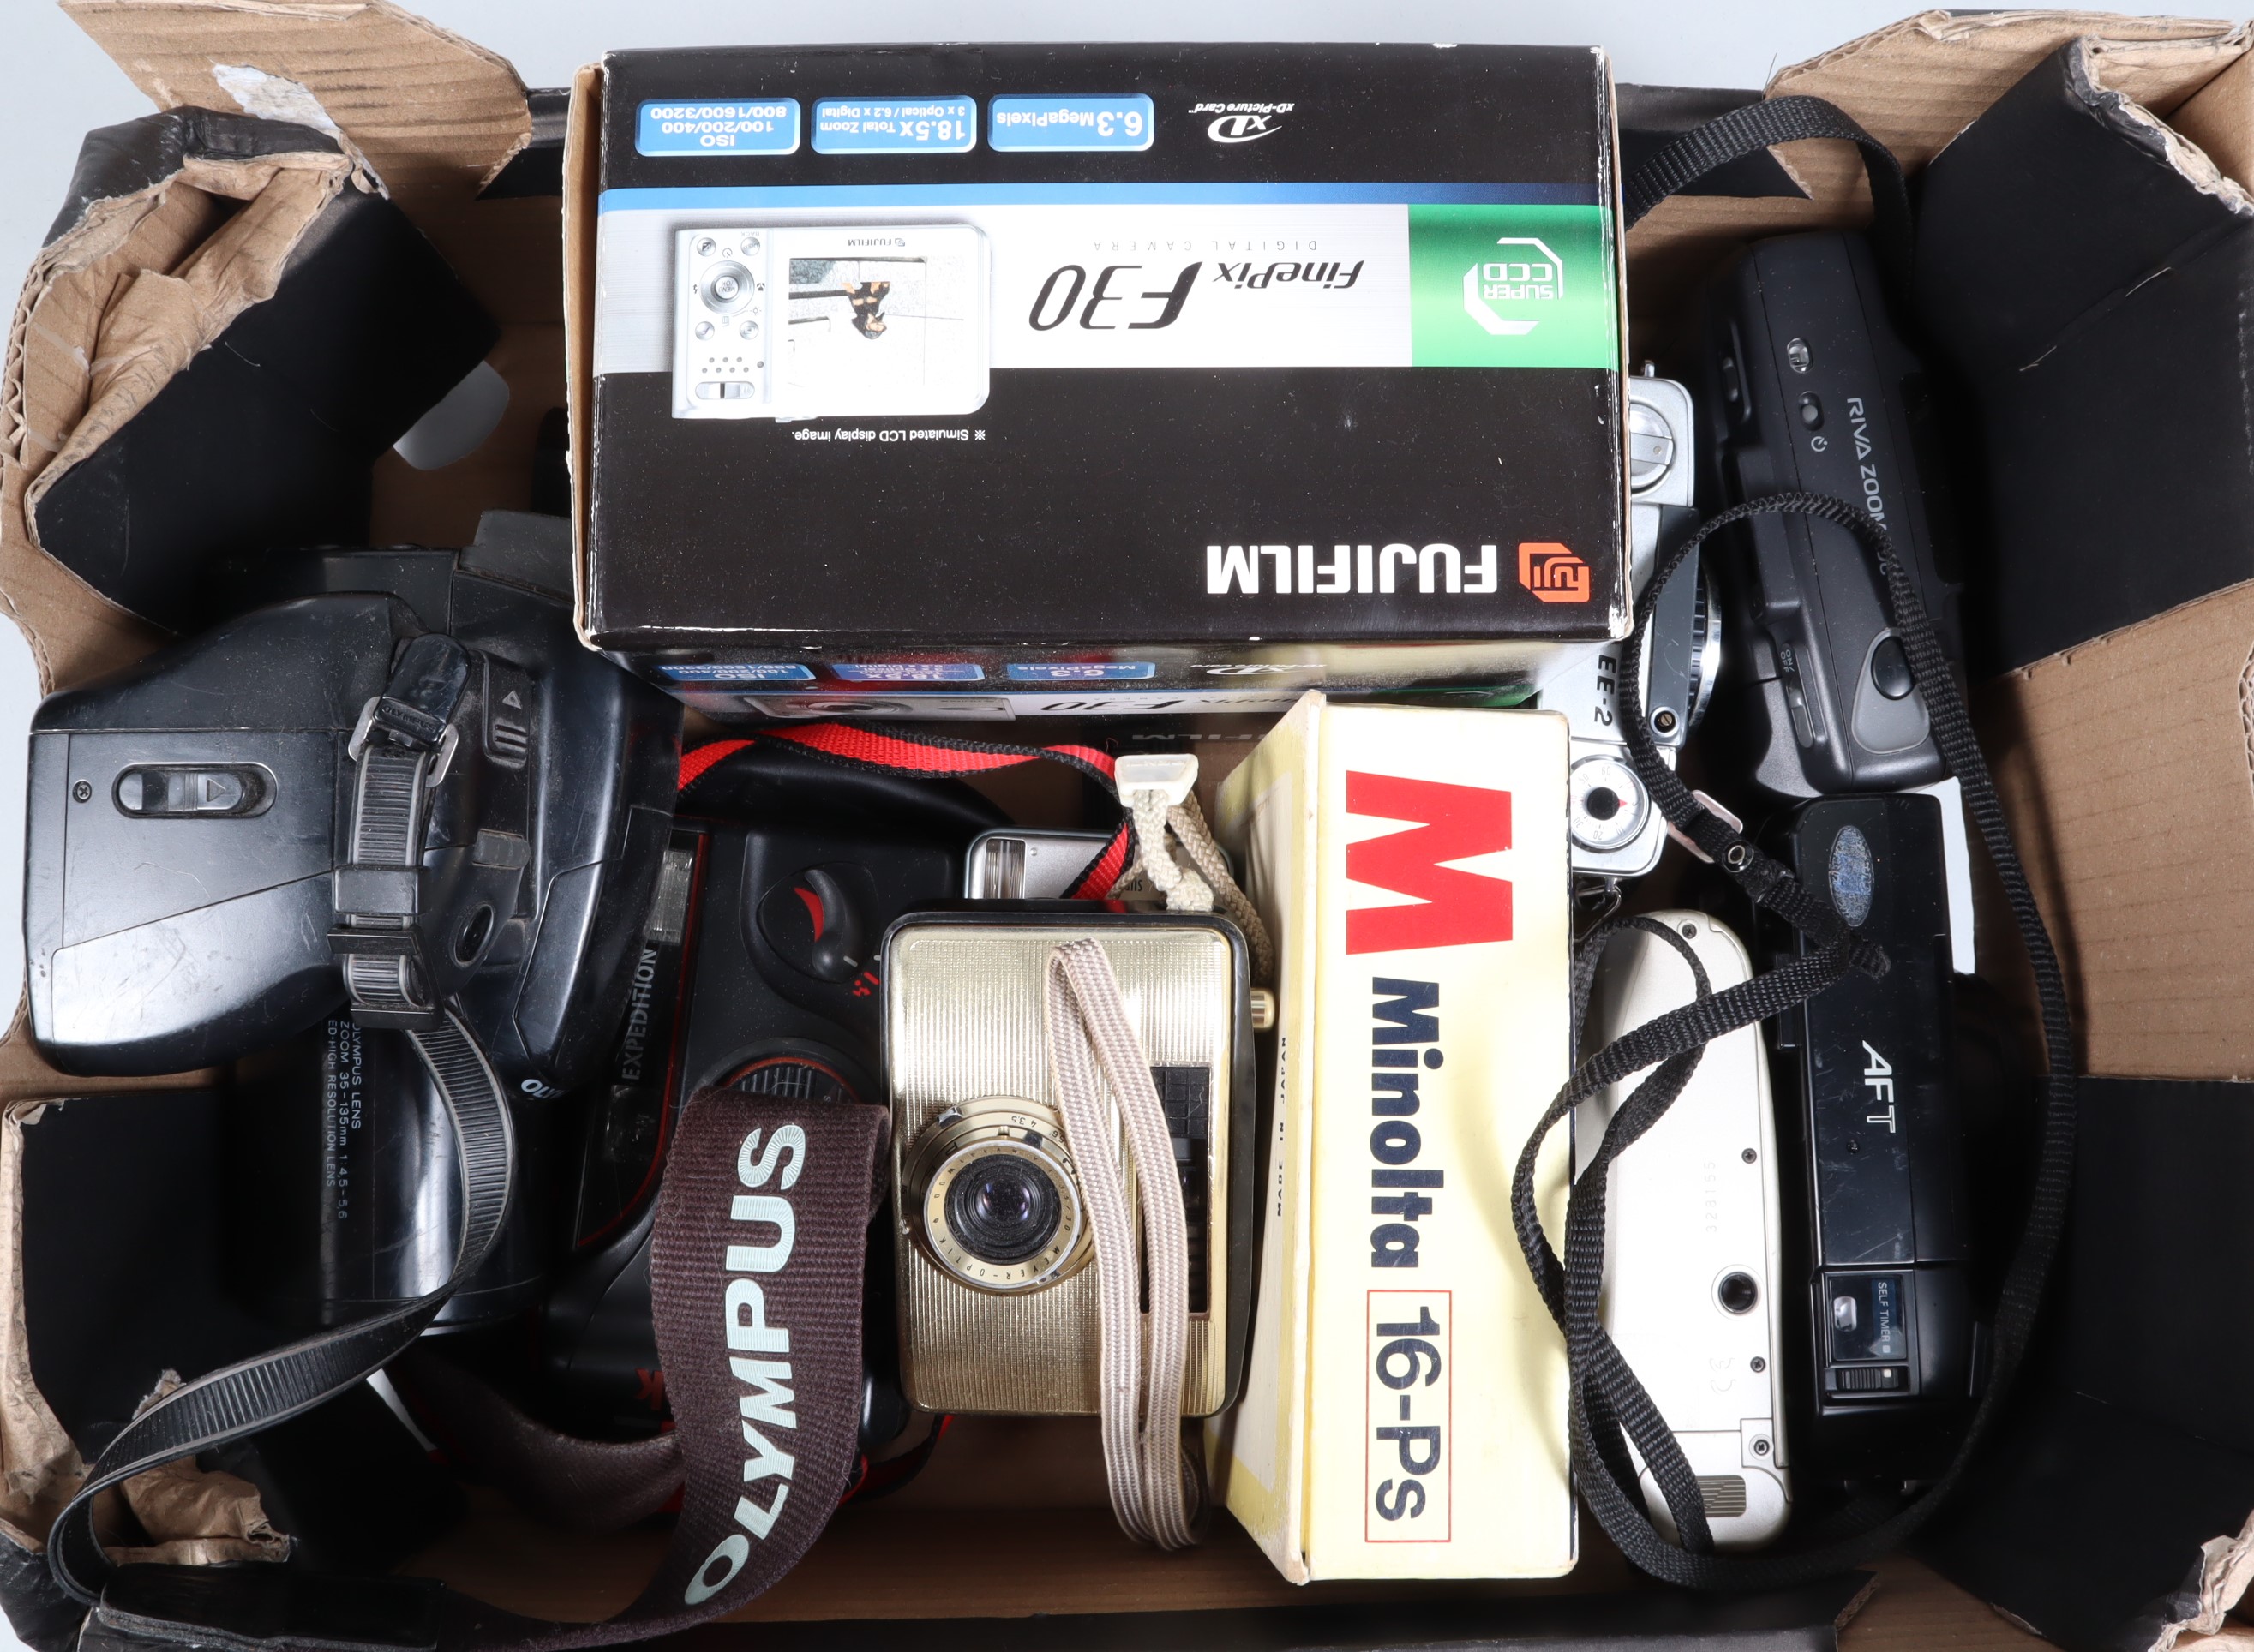 A Group of Compact Cameras, including a Yashica 105, Minolta Riva 70c, Minolta AFT, an Olypus Pen